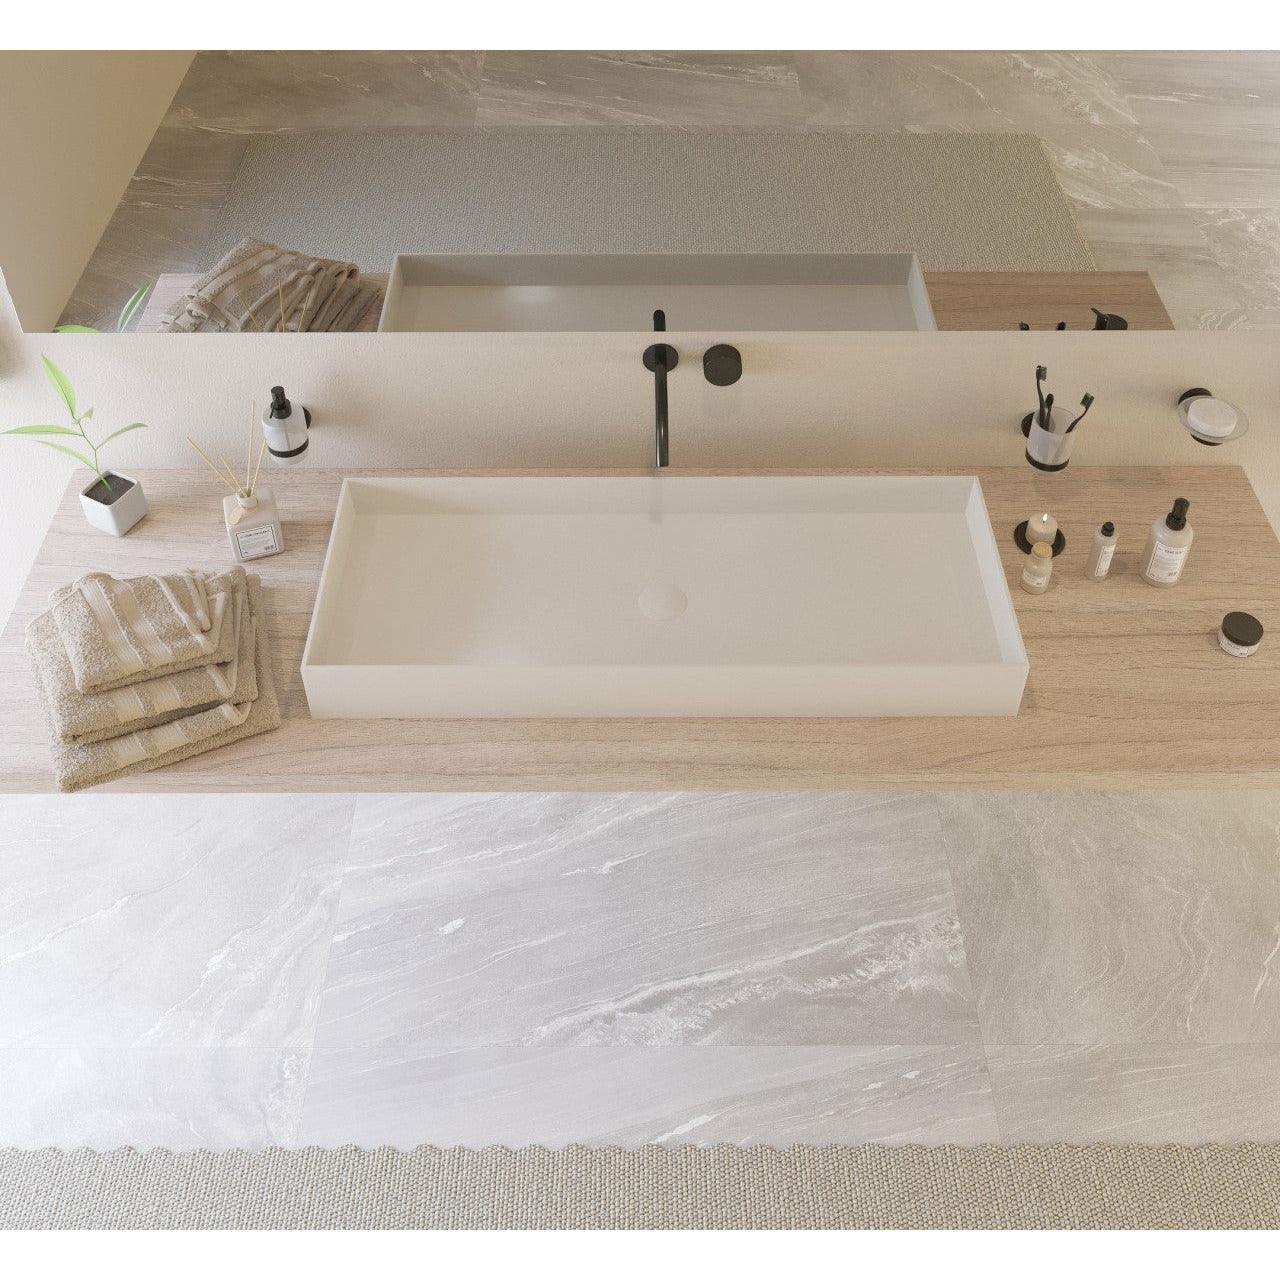 Ideavit Solidjoy-100 Freestanding Washbasin - Sea & Stone Bath